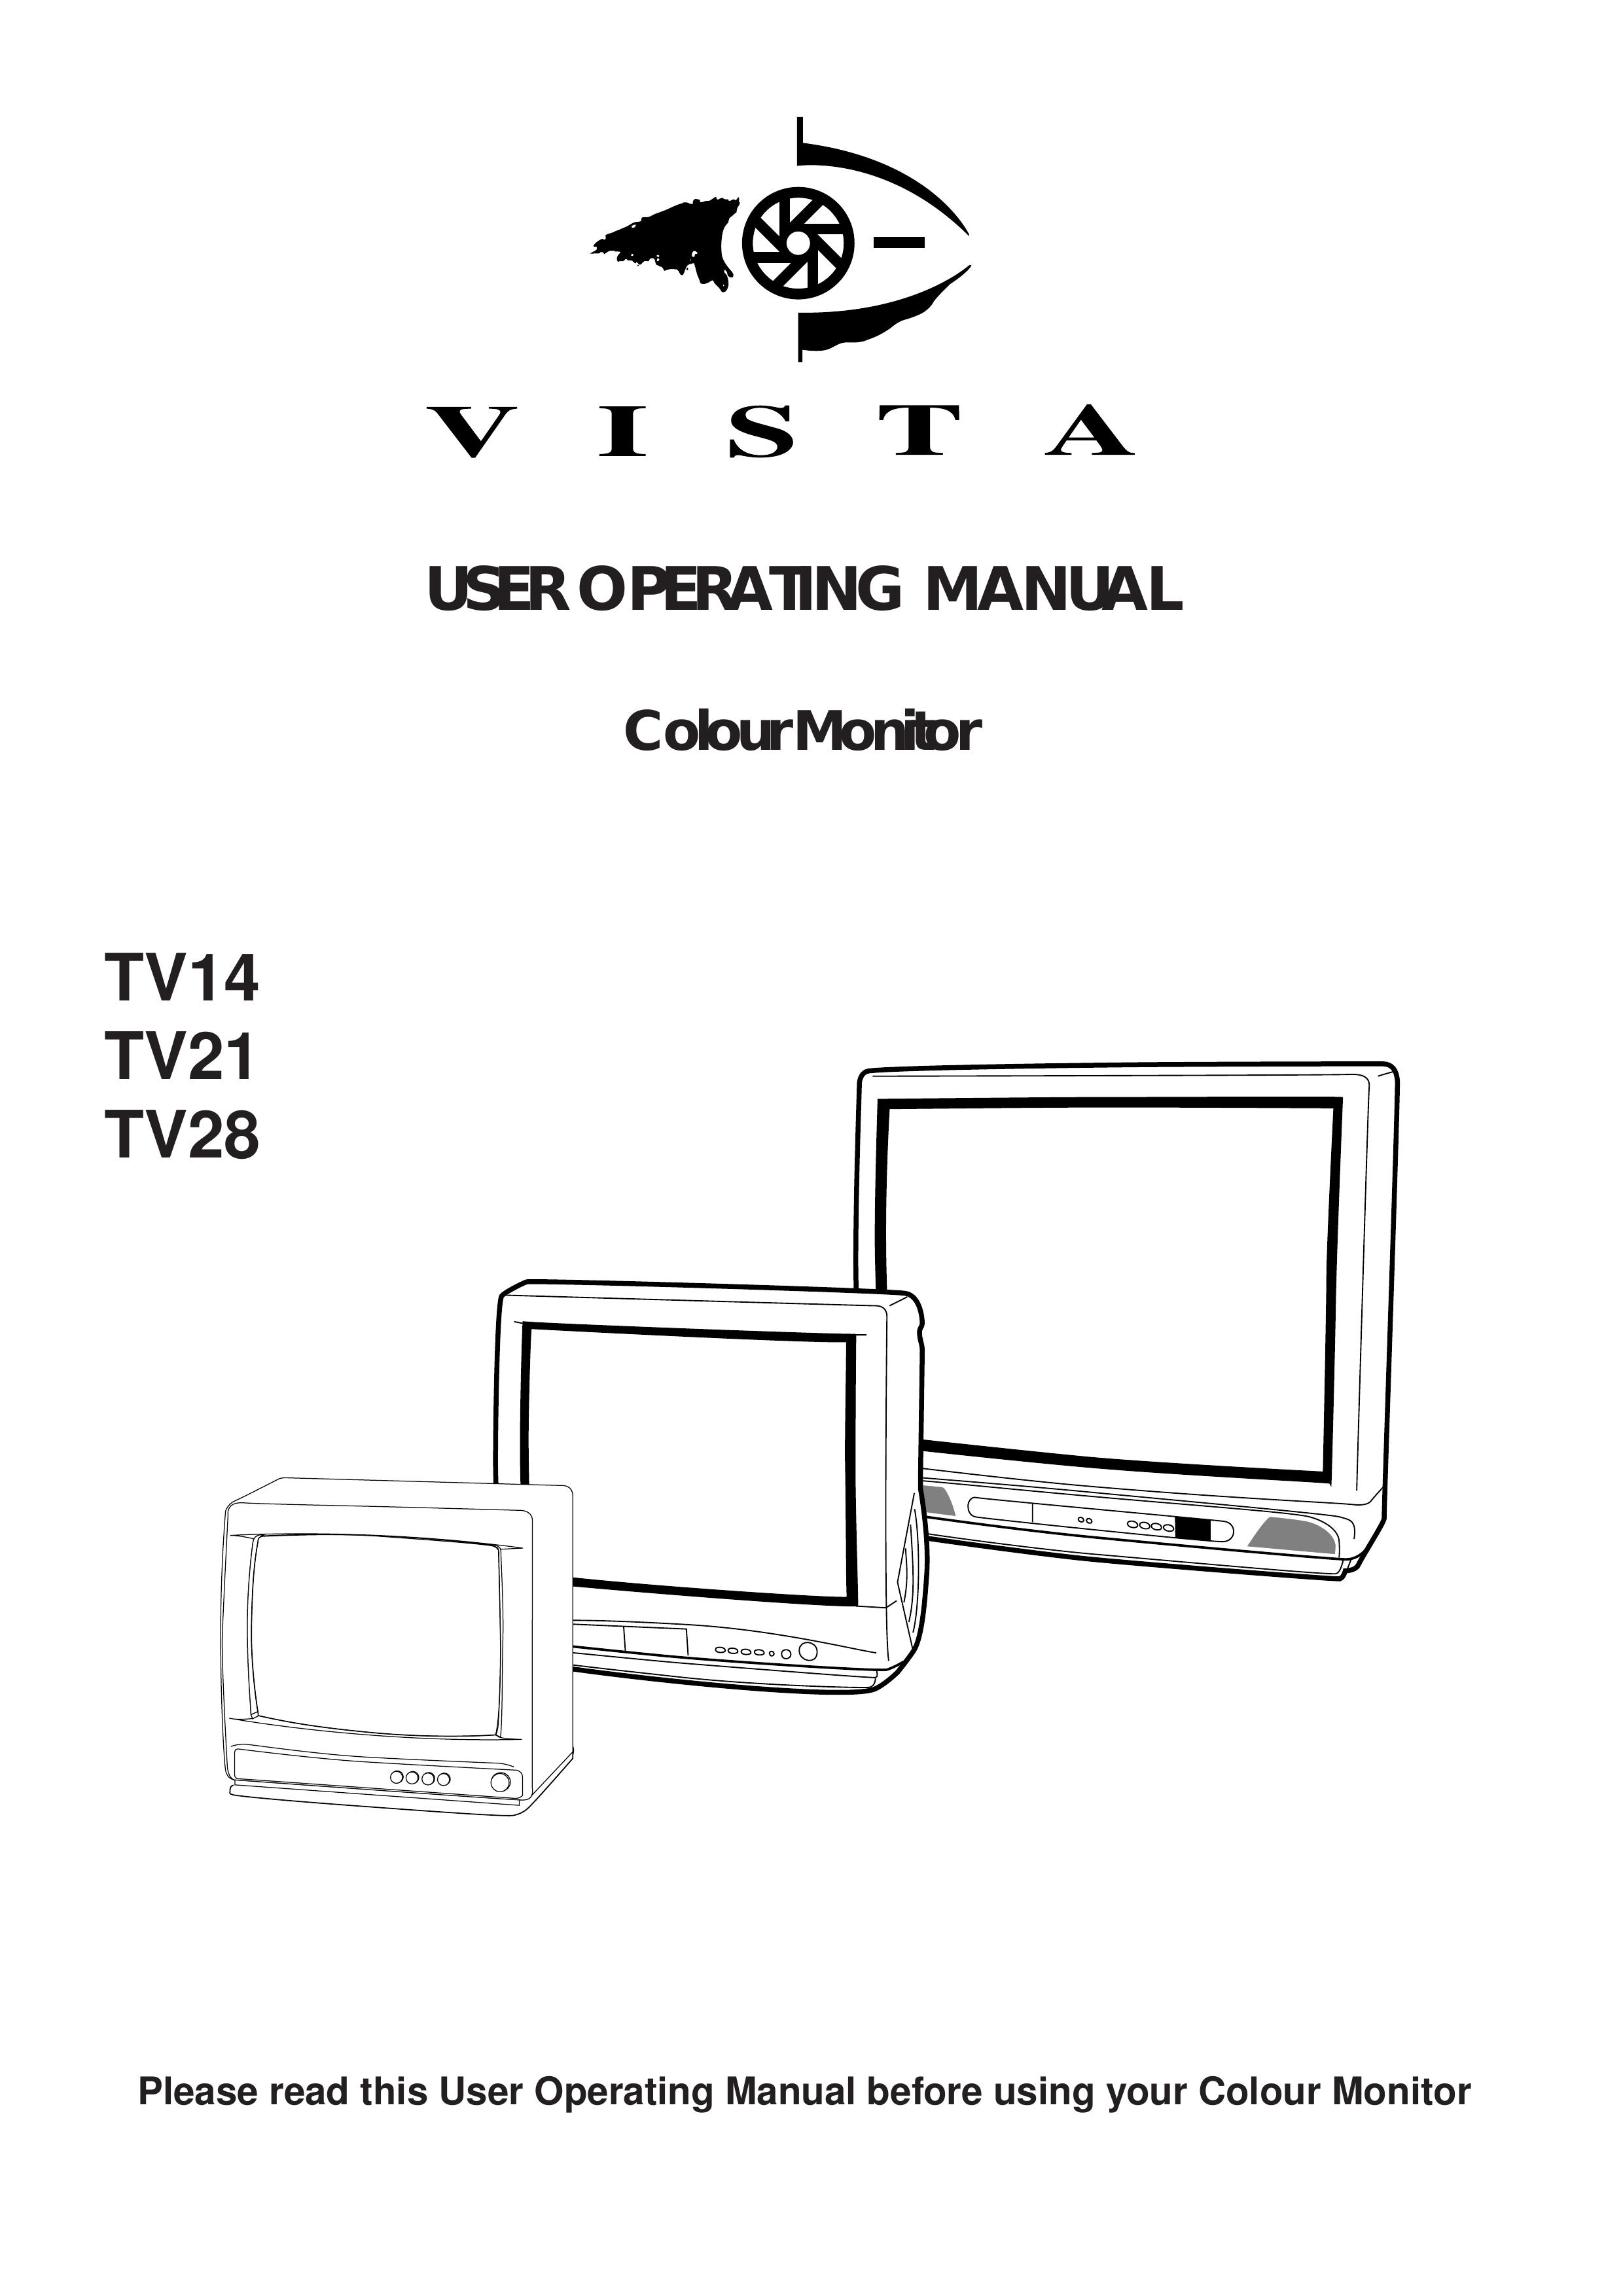 Vista TV21 Blood Glucose Meter User Manual